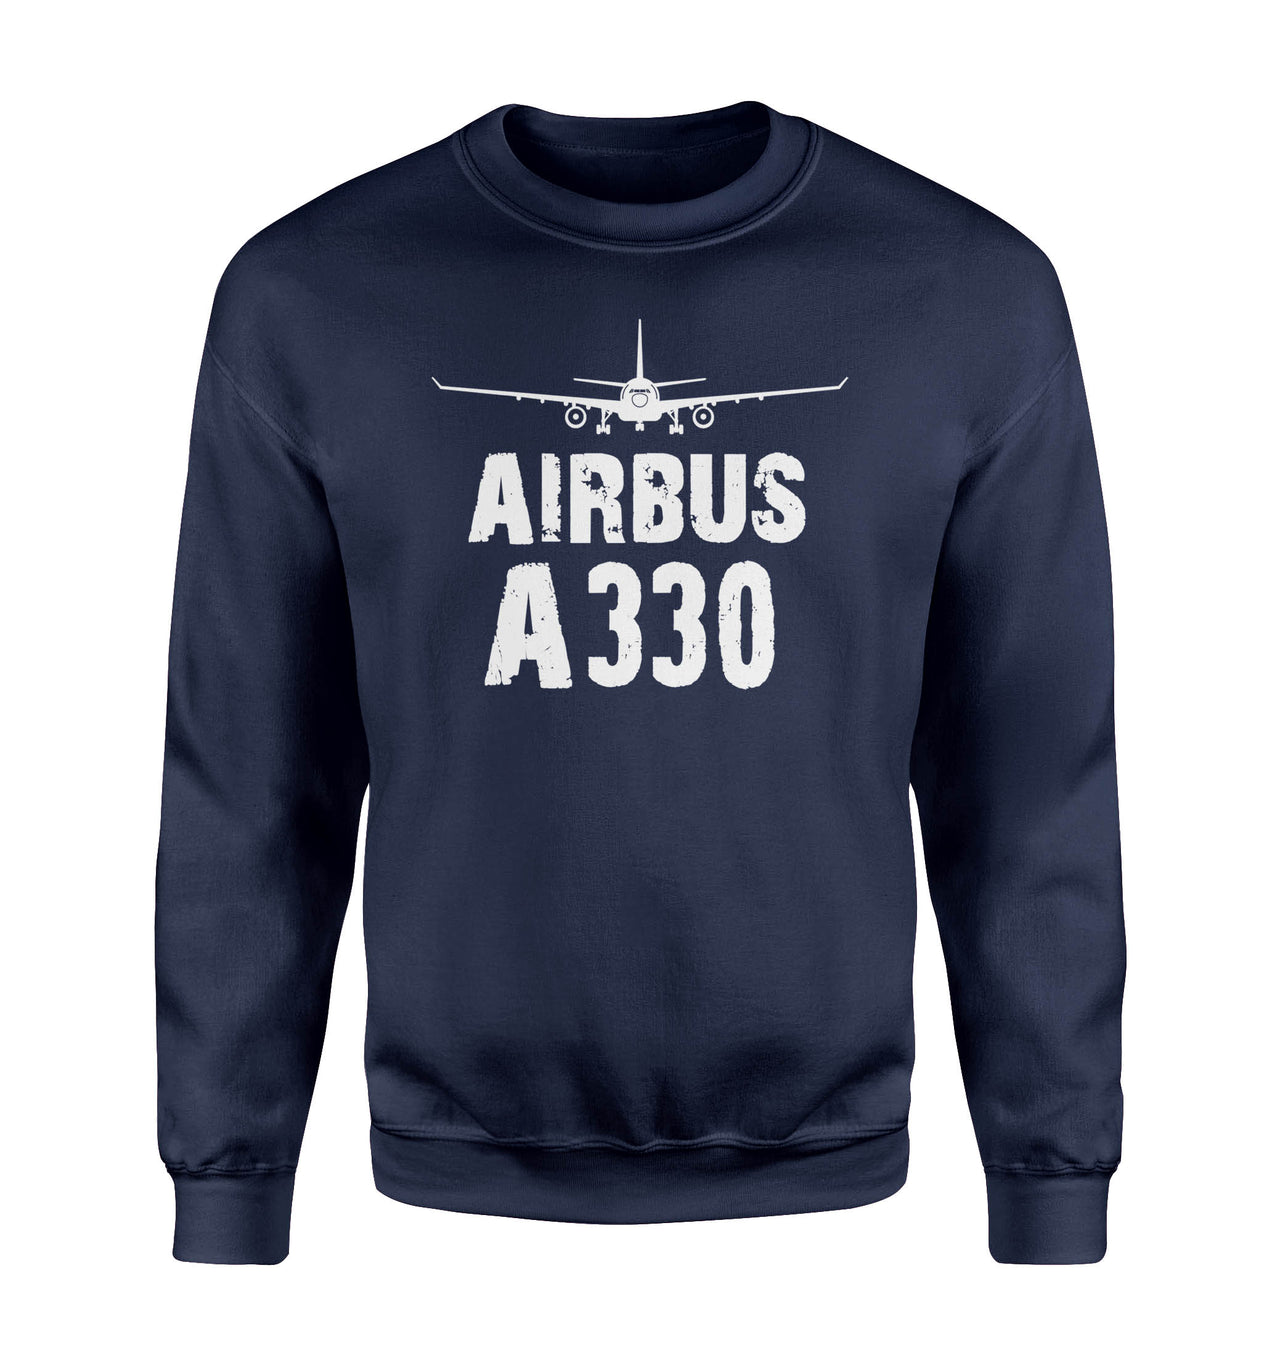 Airbus A330 & Plane Designed Sweatshirts